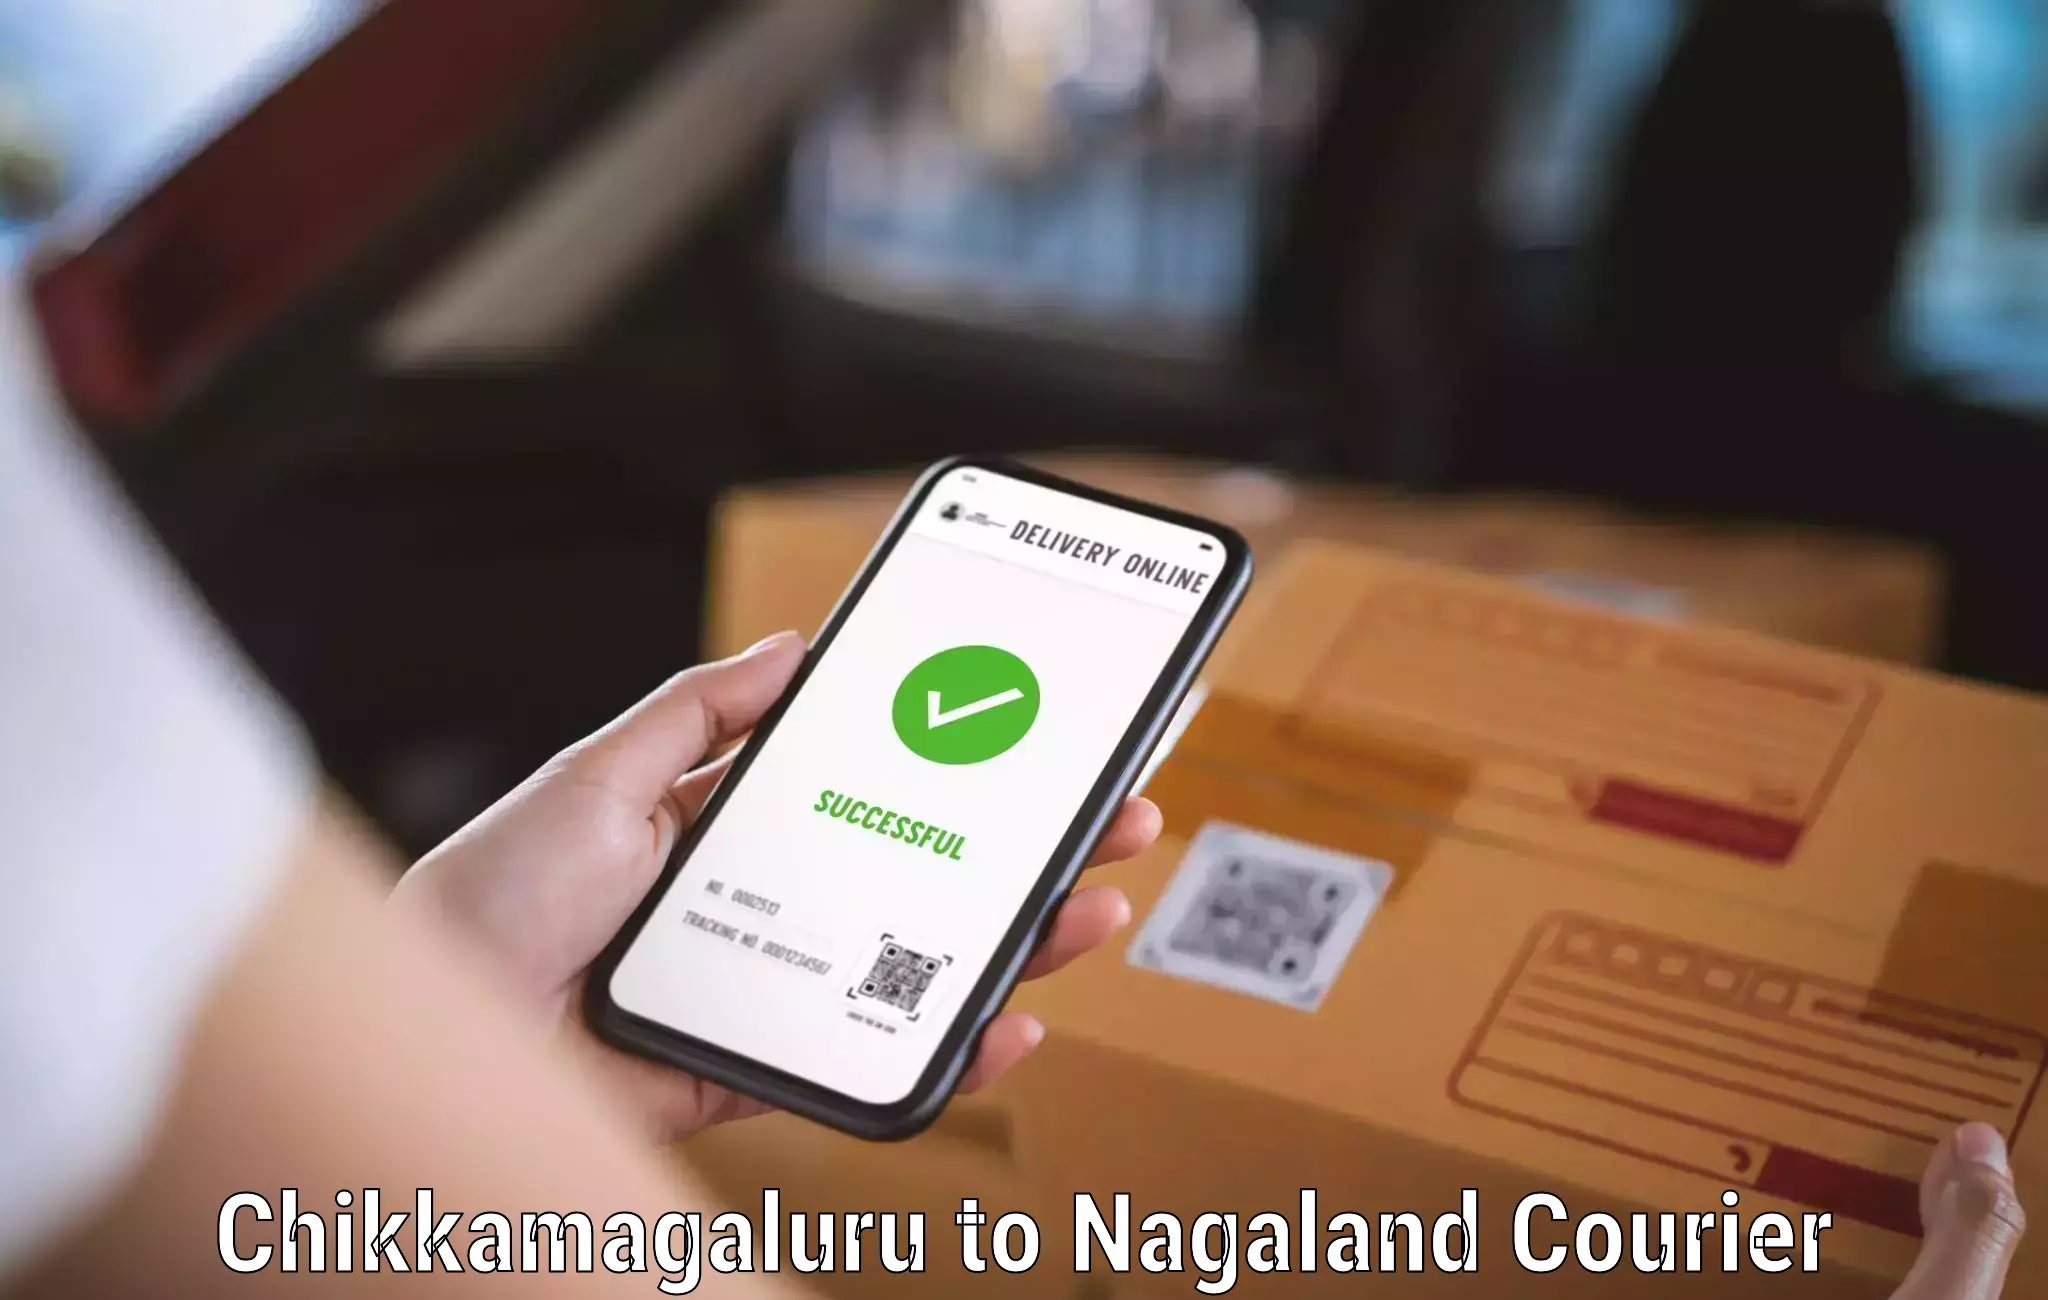 Advanced shipping network Chikkamagaluru to Nagaland